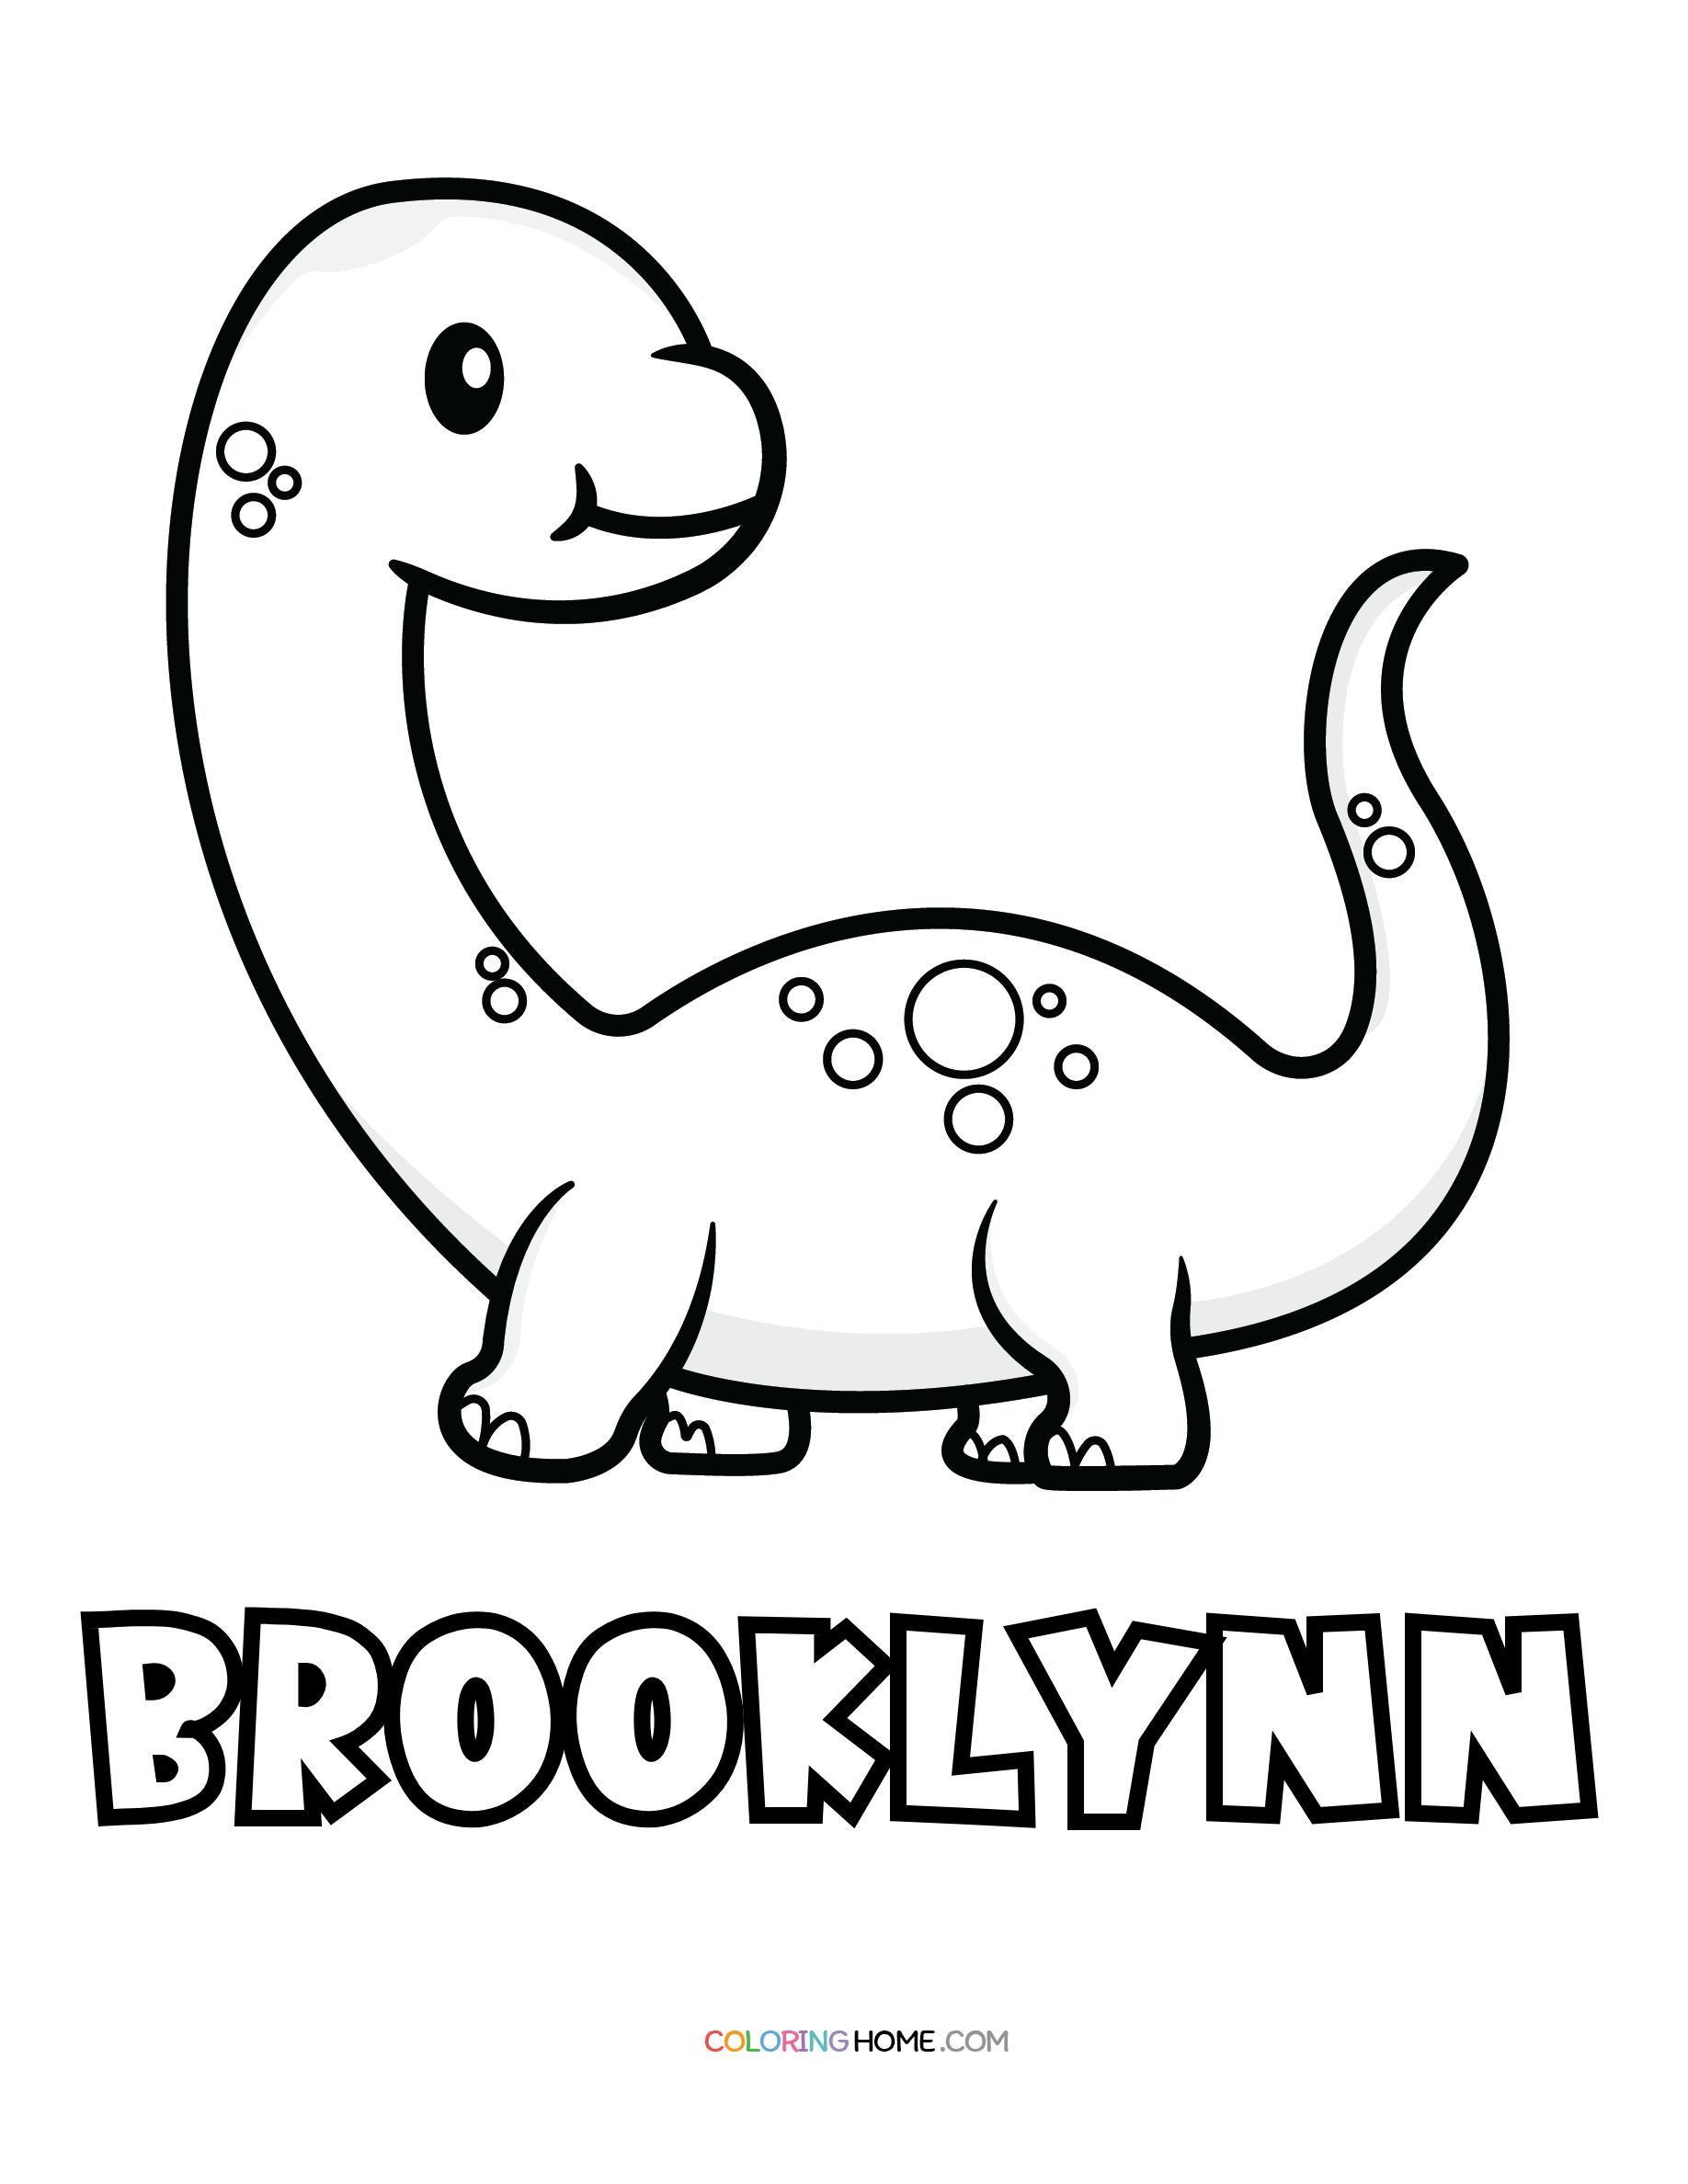 Brooklynn dinosaur coloring page